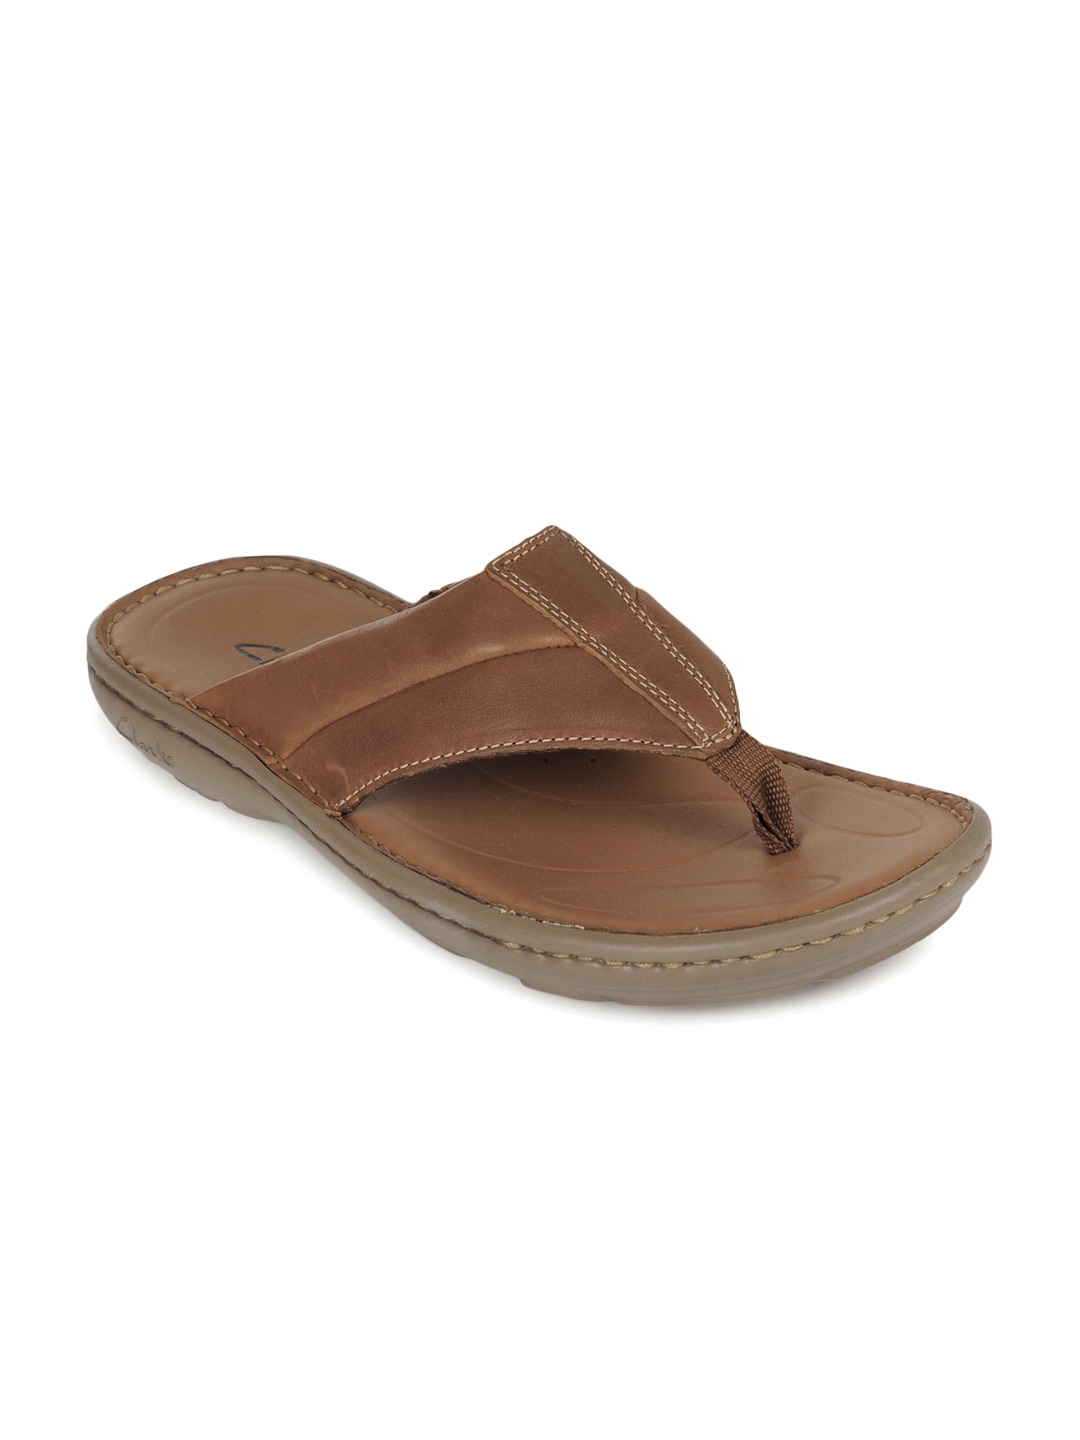 Clarks Men Brown Leather Sandals